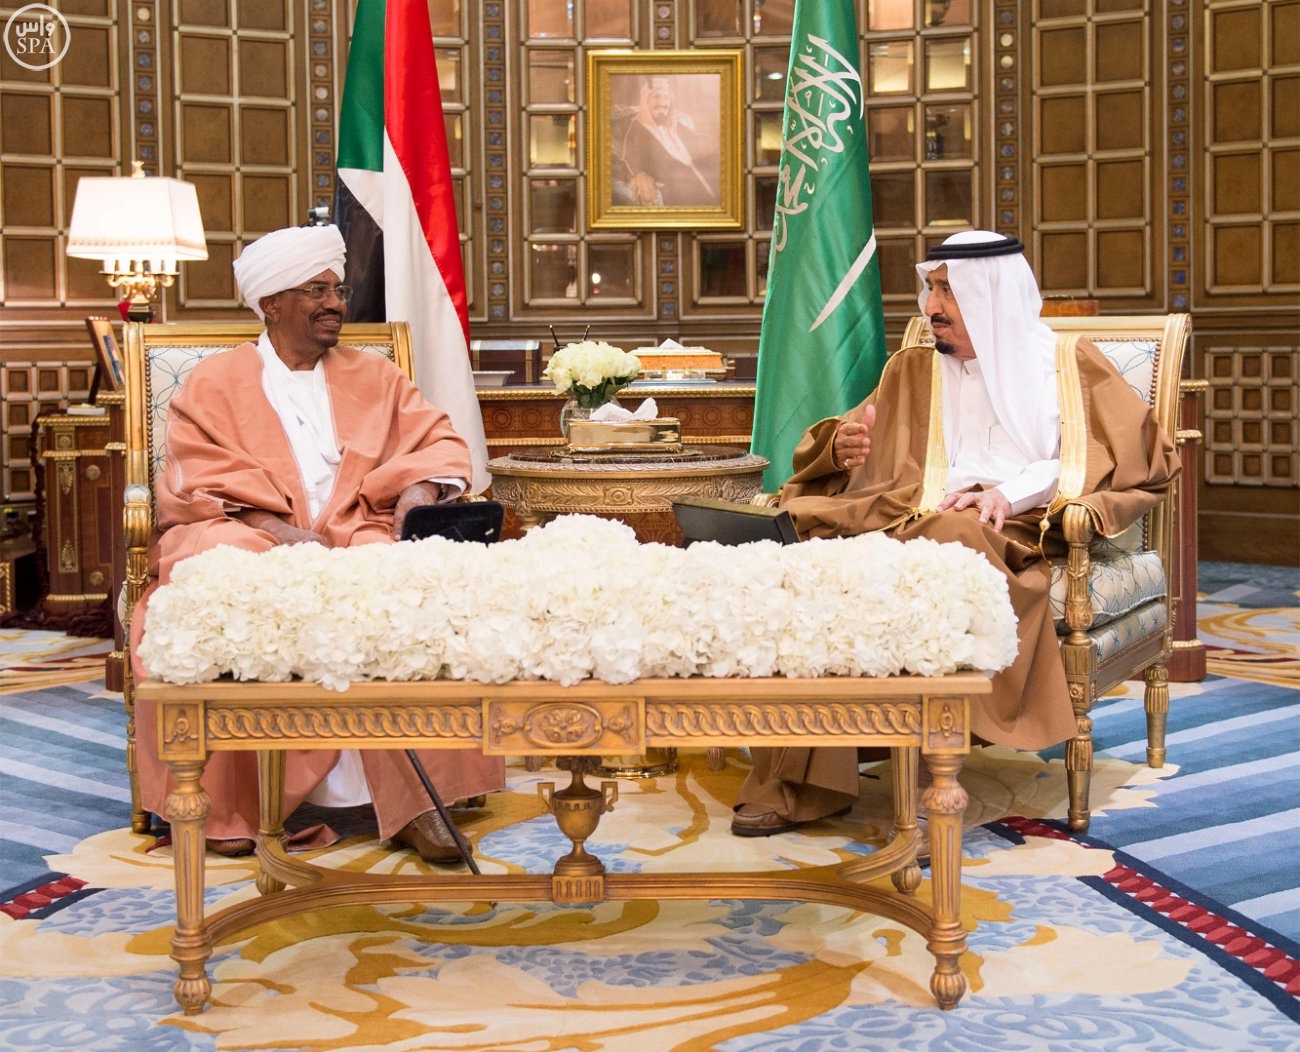 Saudi King Salman bin Abdulaziz Al Saud held talks with visiting Sudanese President Omar Hassan Al-Bashir